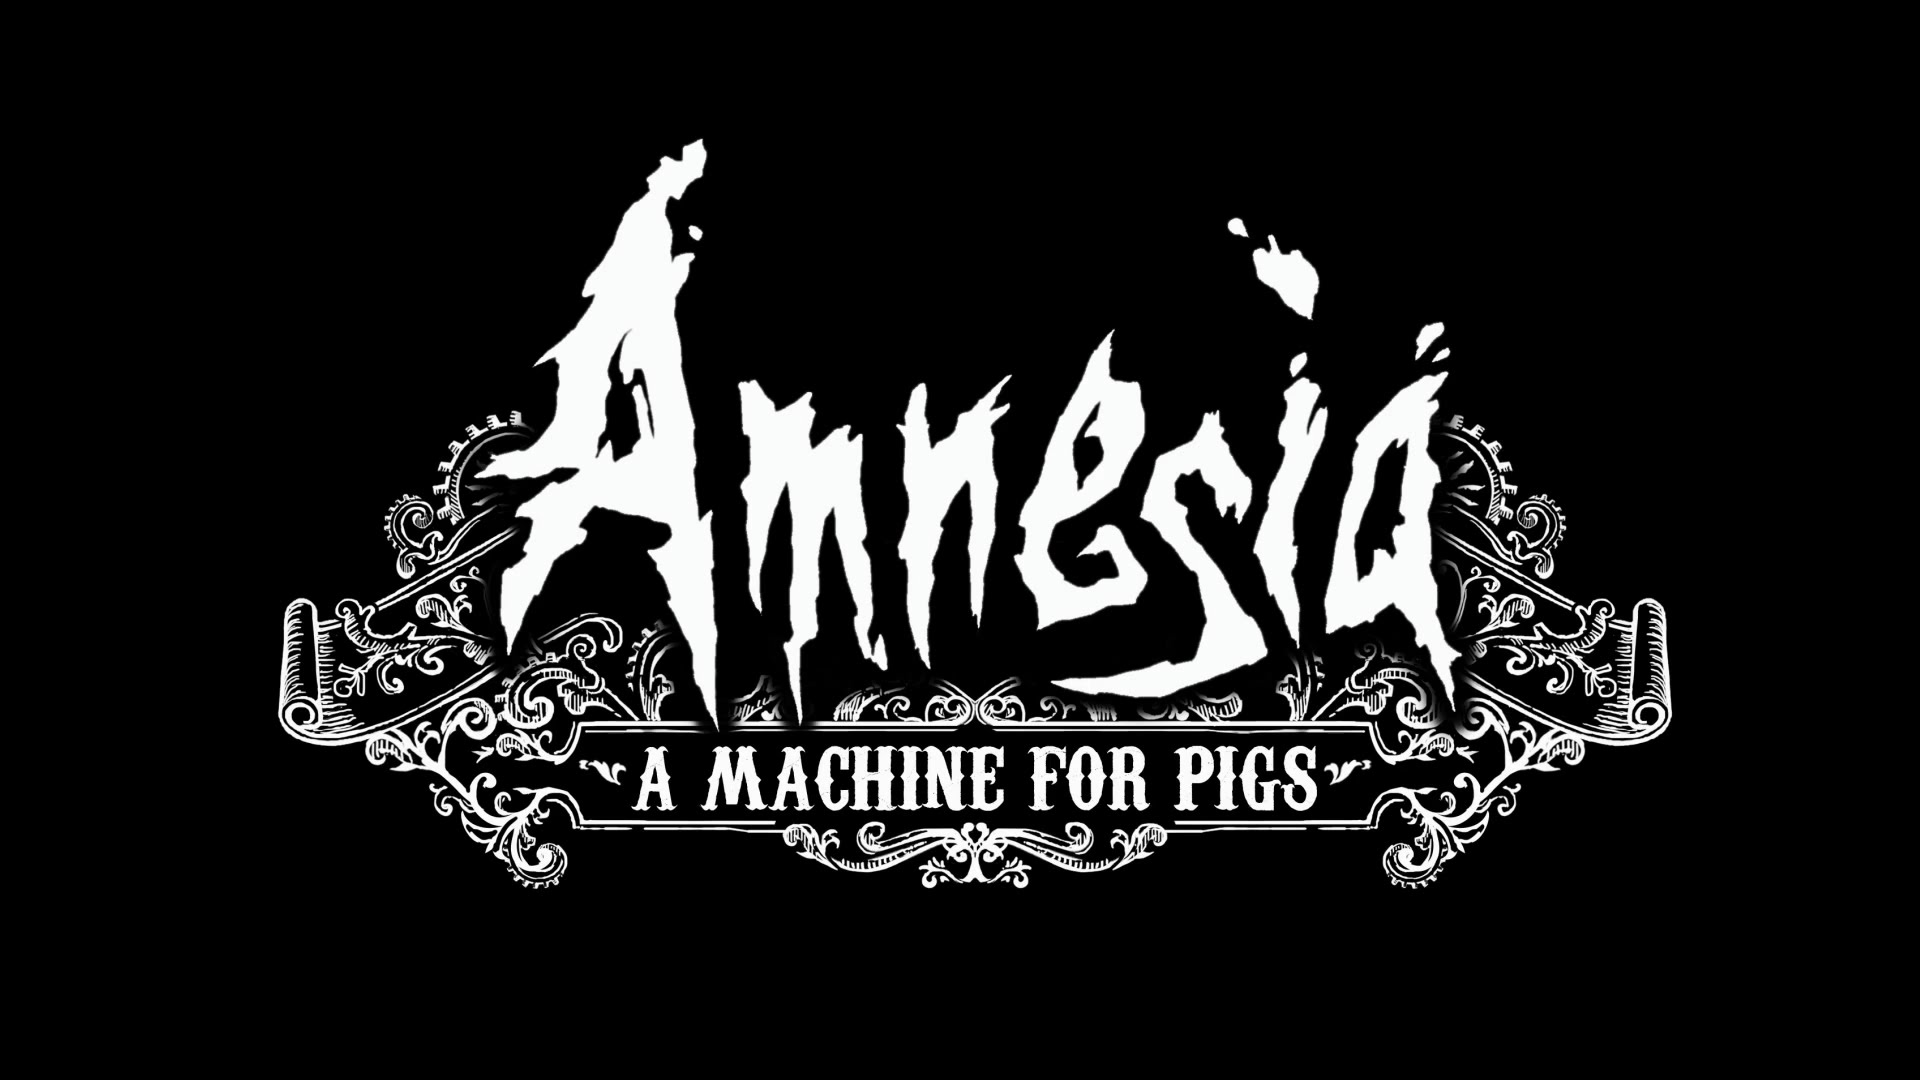 Alimentant els forns. Amnesia: A machine for pigs #7 de Patapum Pampam